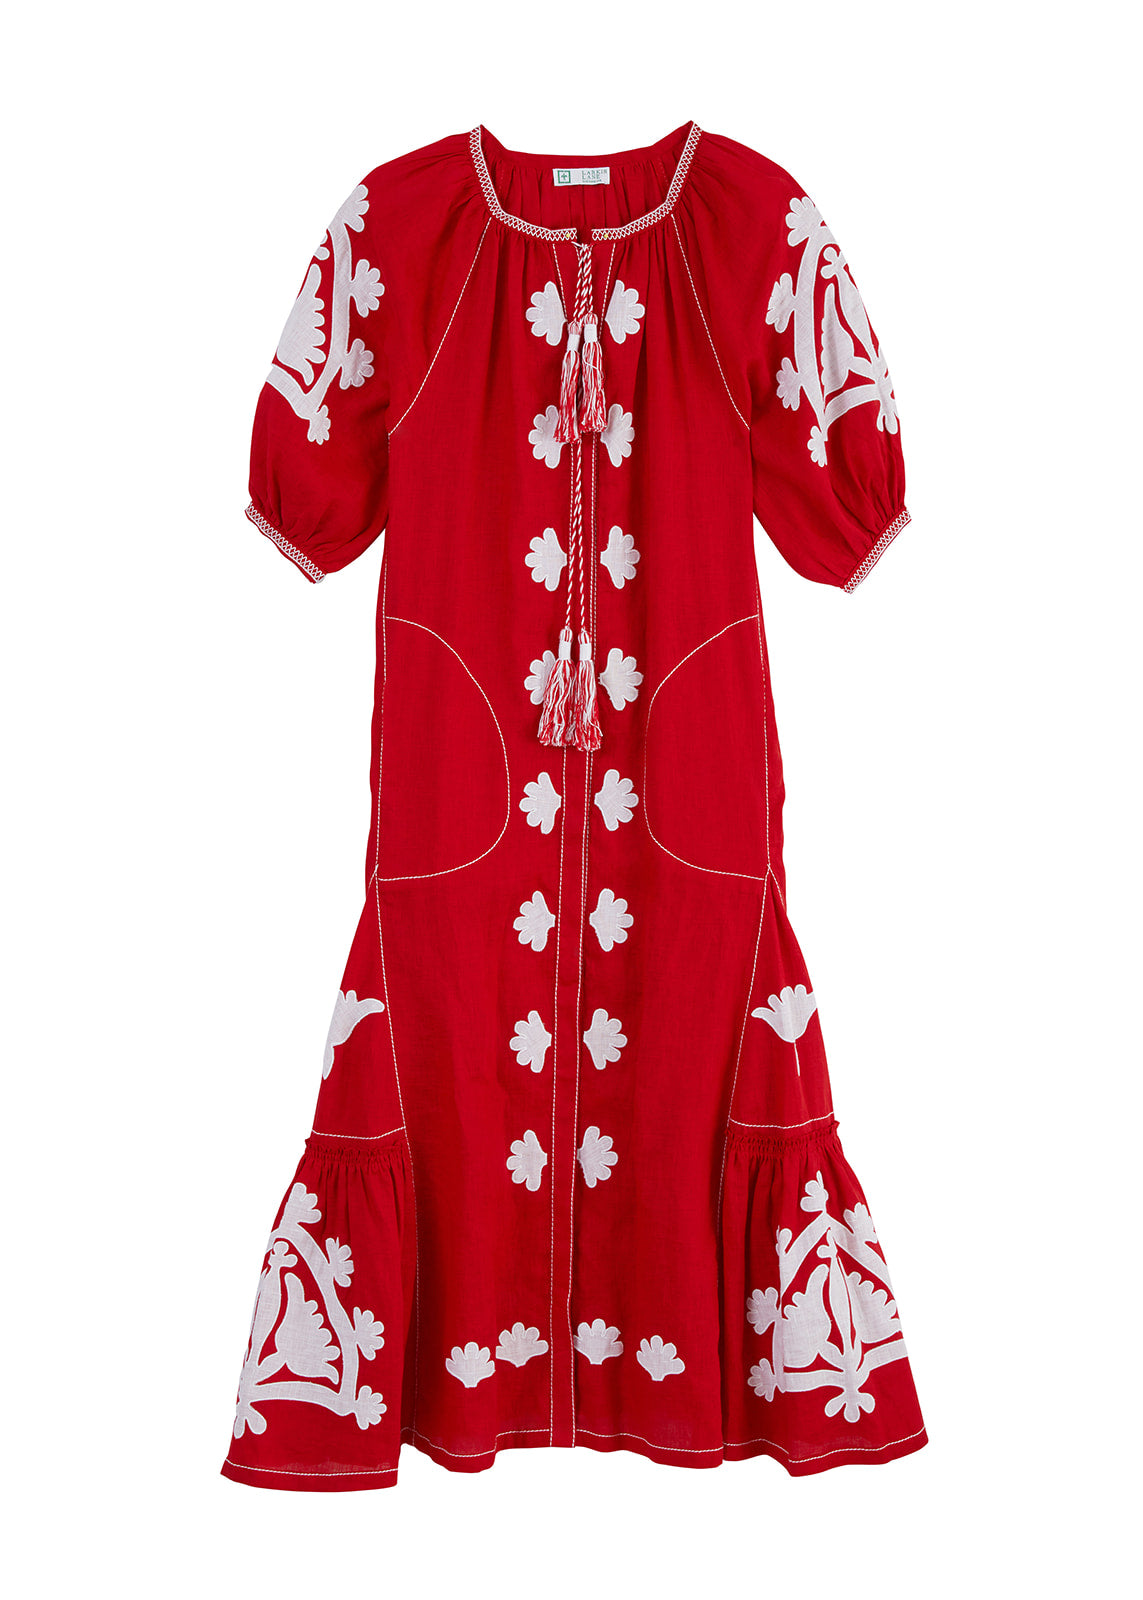 Matisse Embroidered Ukrainian Dress / Caftan  - Red, White by Larkin Lane